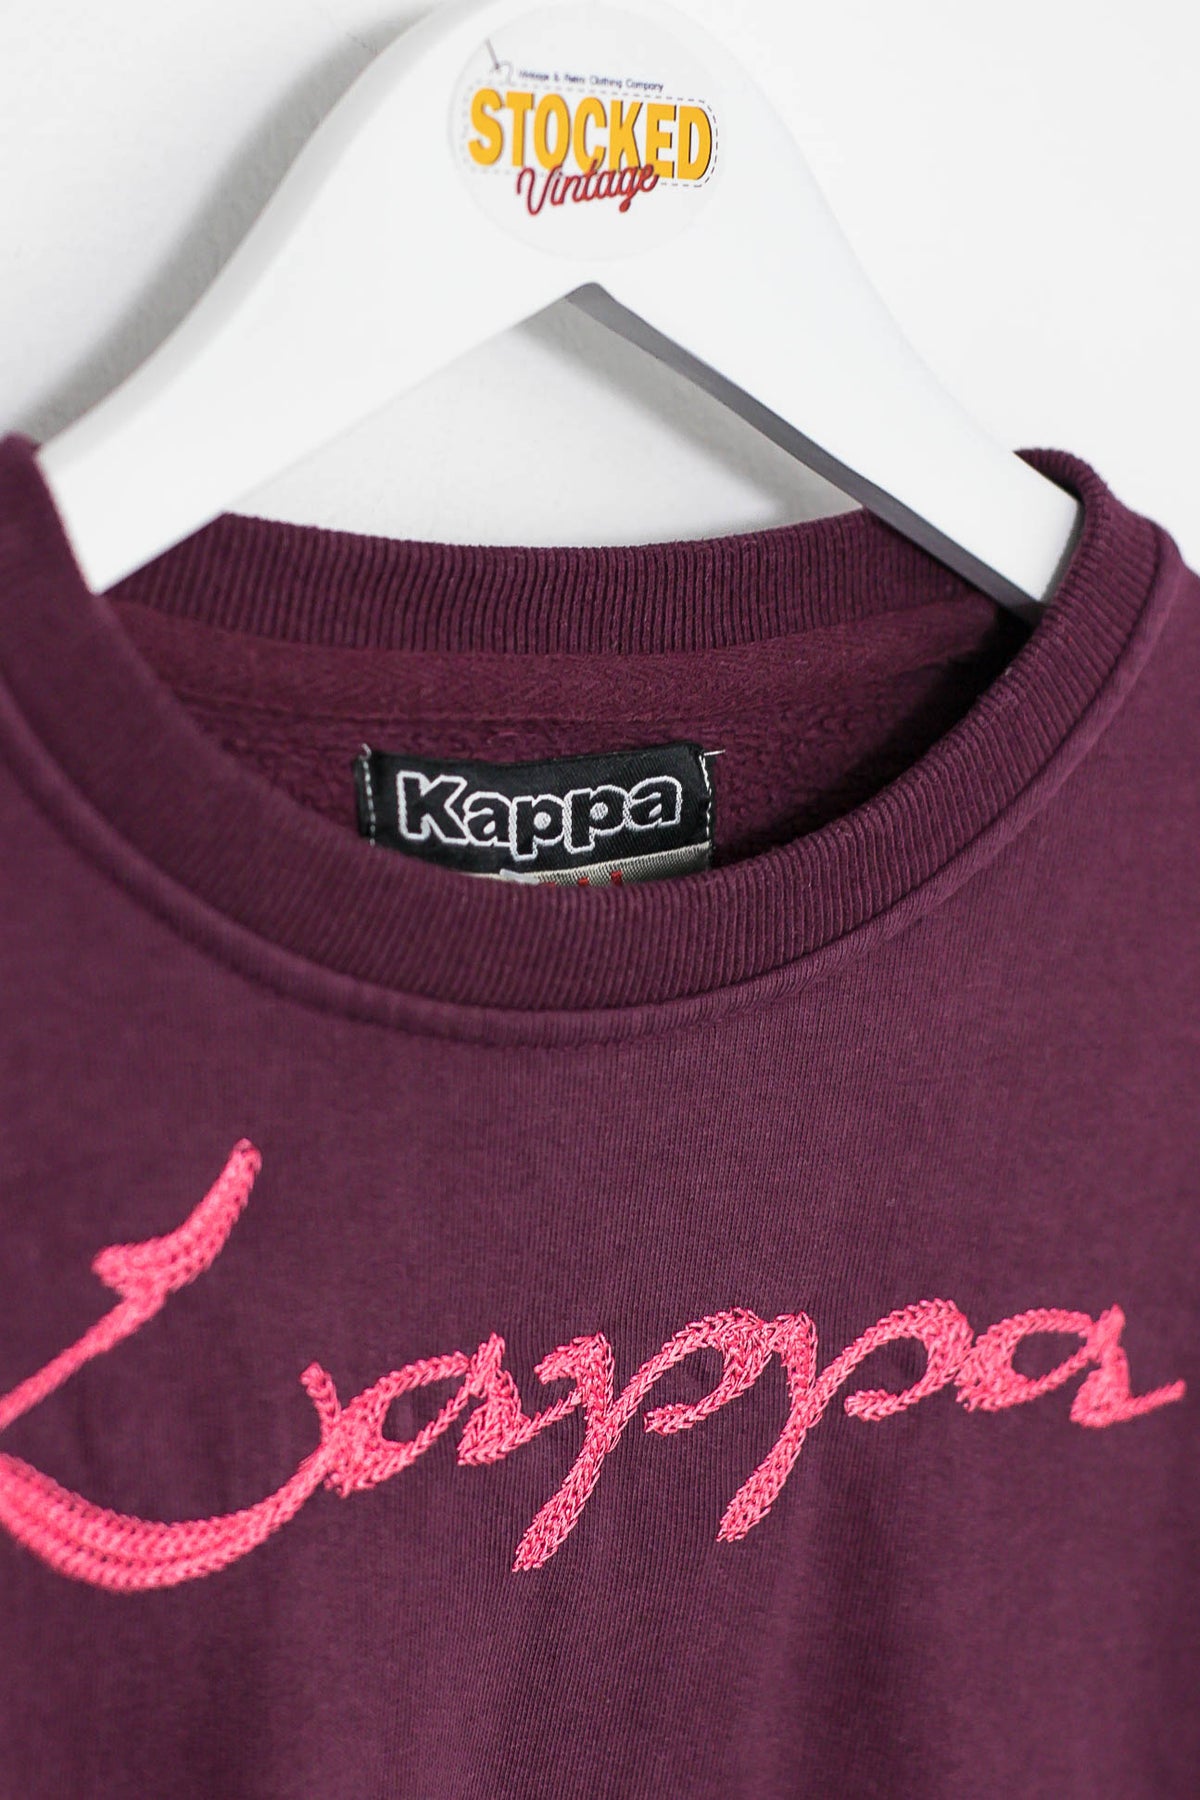 Kappa Sweatshirt (S)